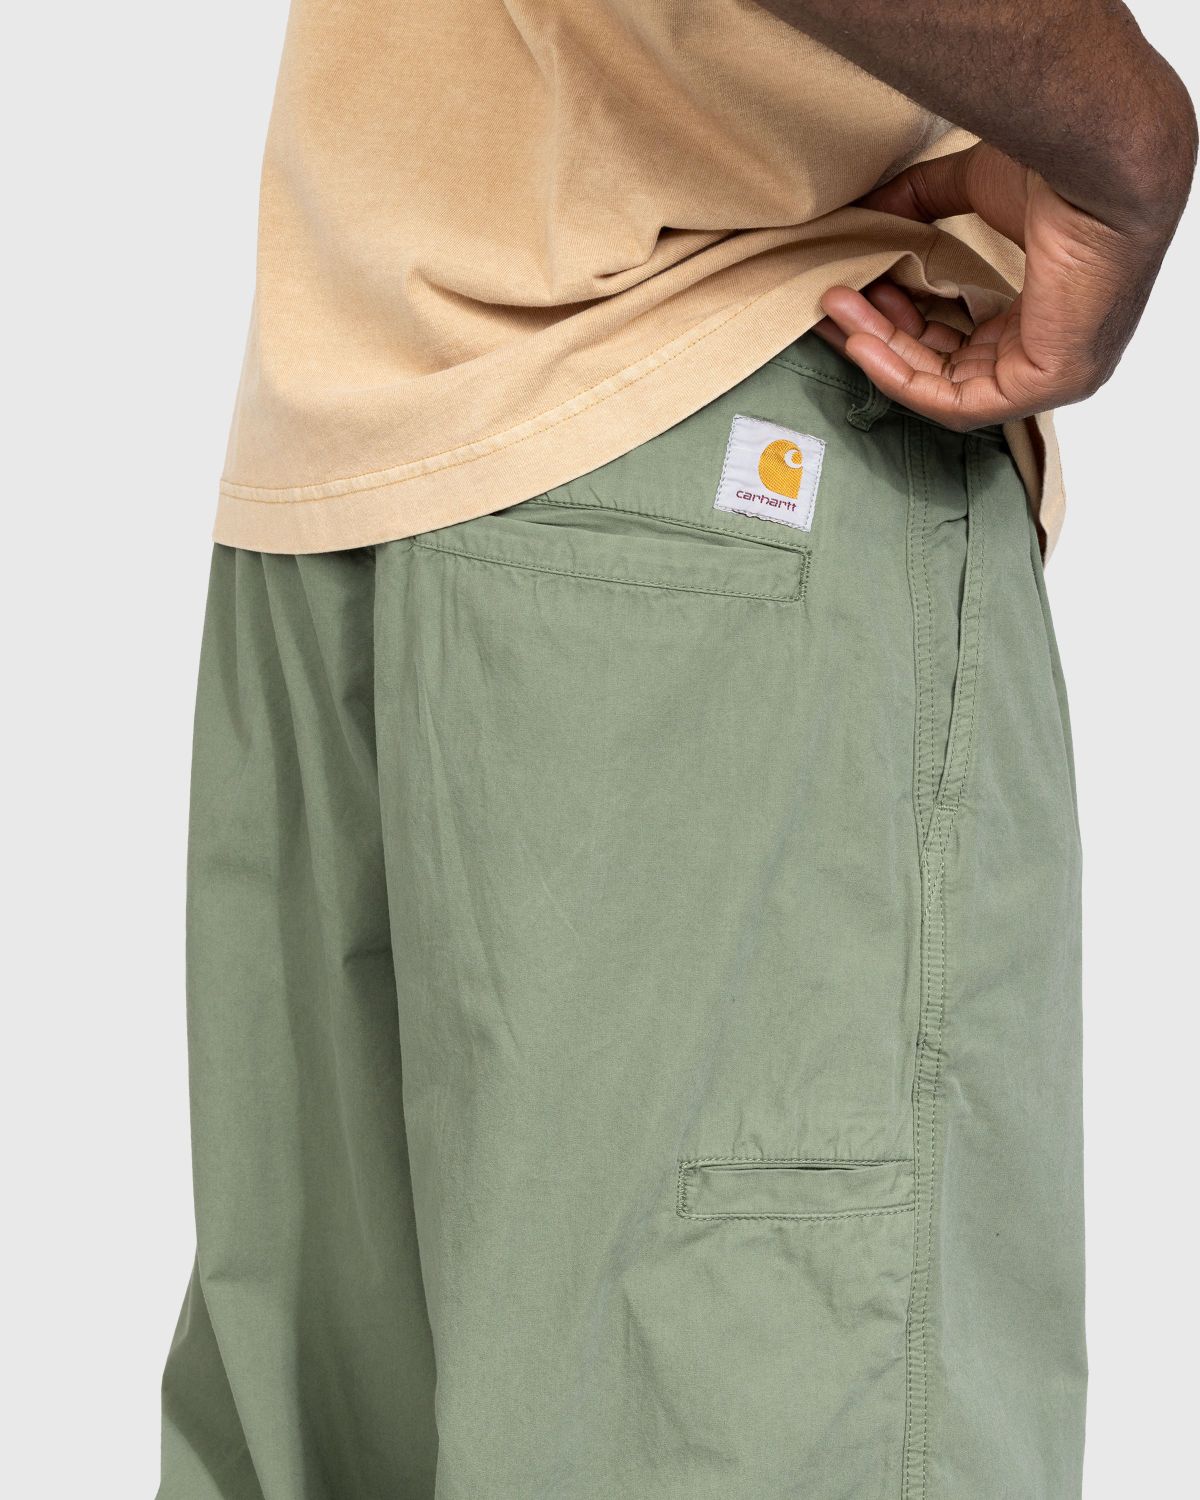 Carhartt WIP – Colston Pant Stonewashed Dollar Green - Pants - Green - Image 4